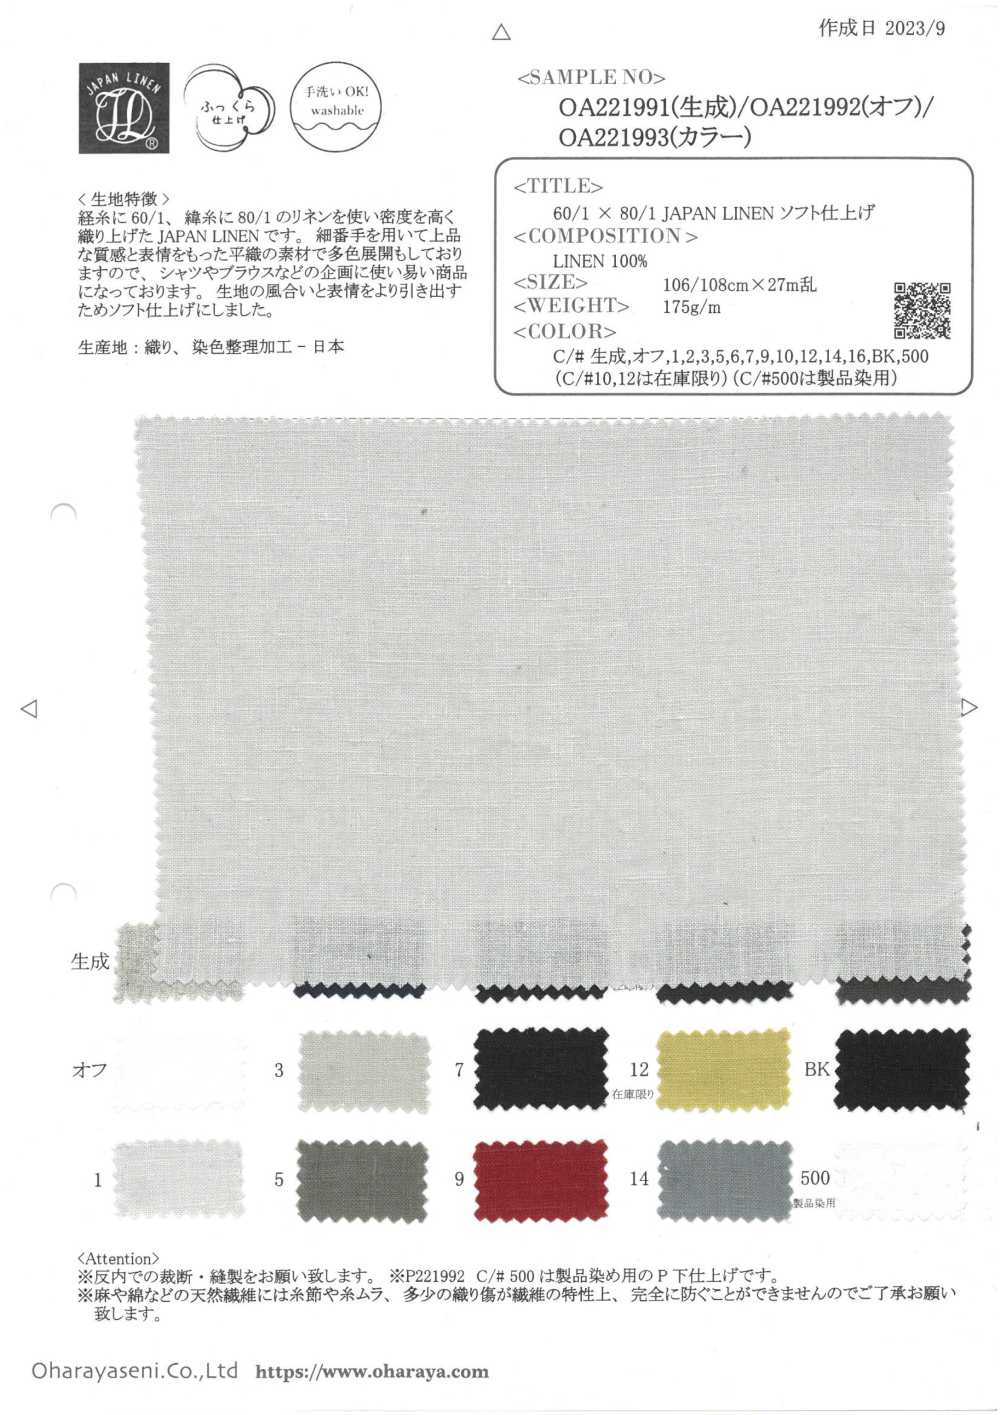 OA221993 60/1 × 80/1 JAPAN LEINEN Soft Finish (Farbe)[Textilgewebe] Oharayaseni